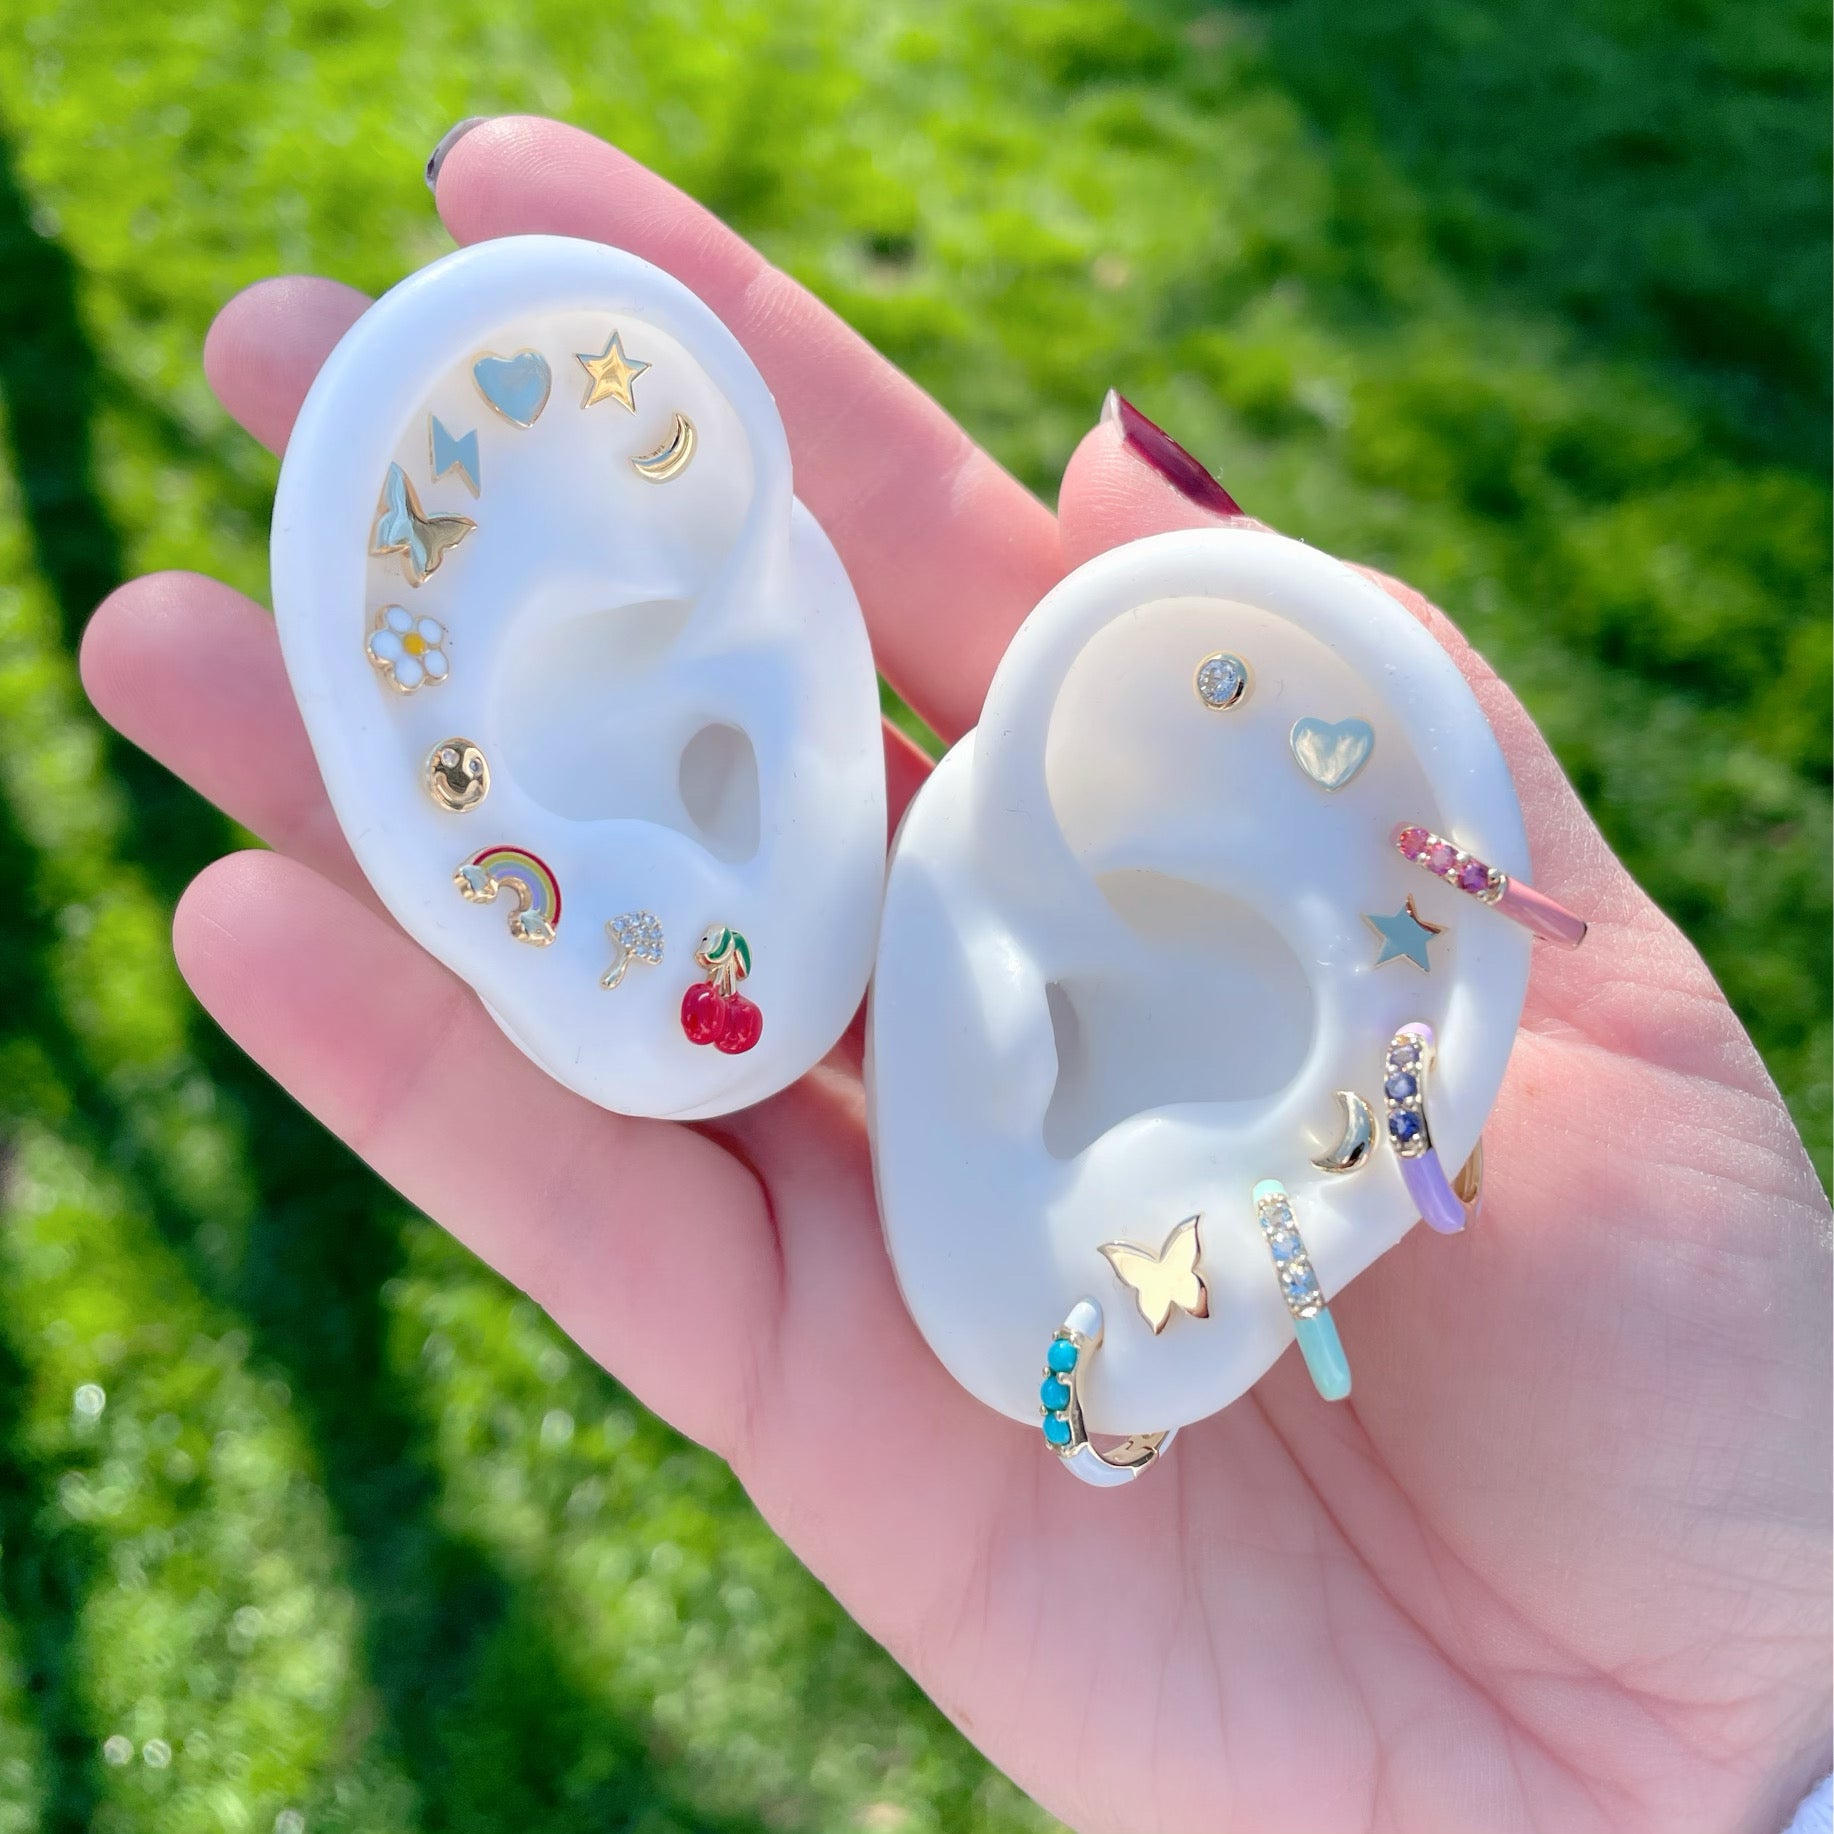 White Enamel and Turquoise Huggie Earrings